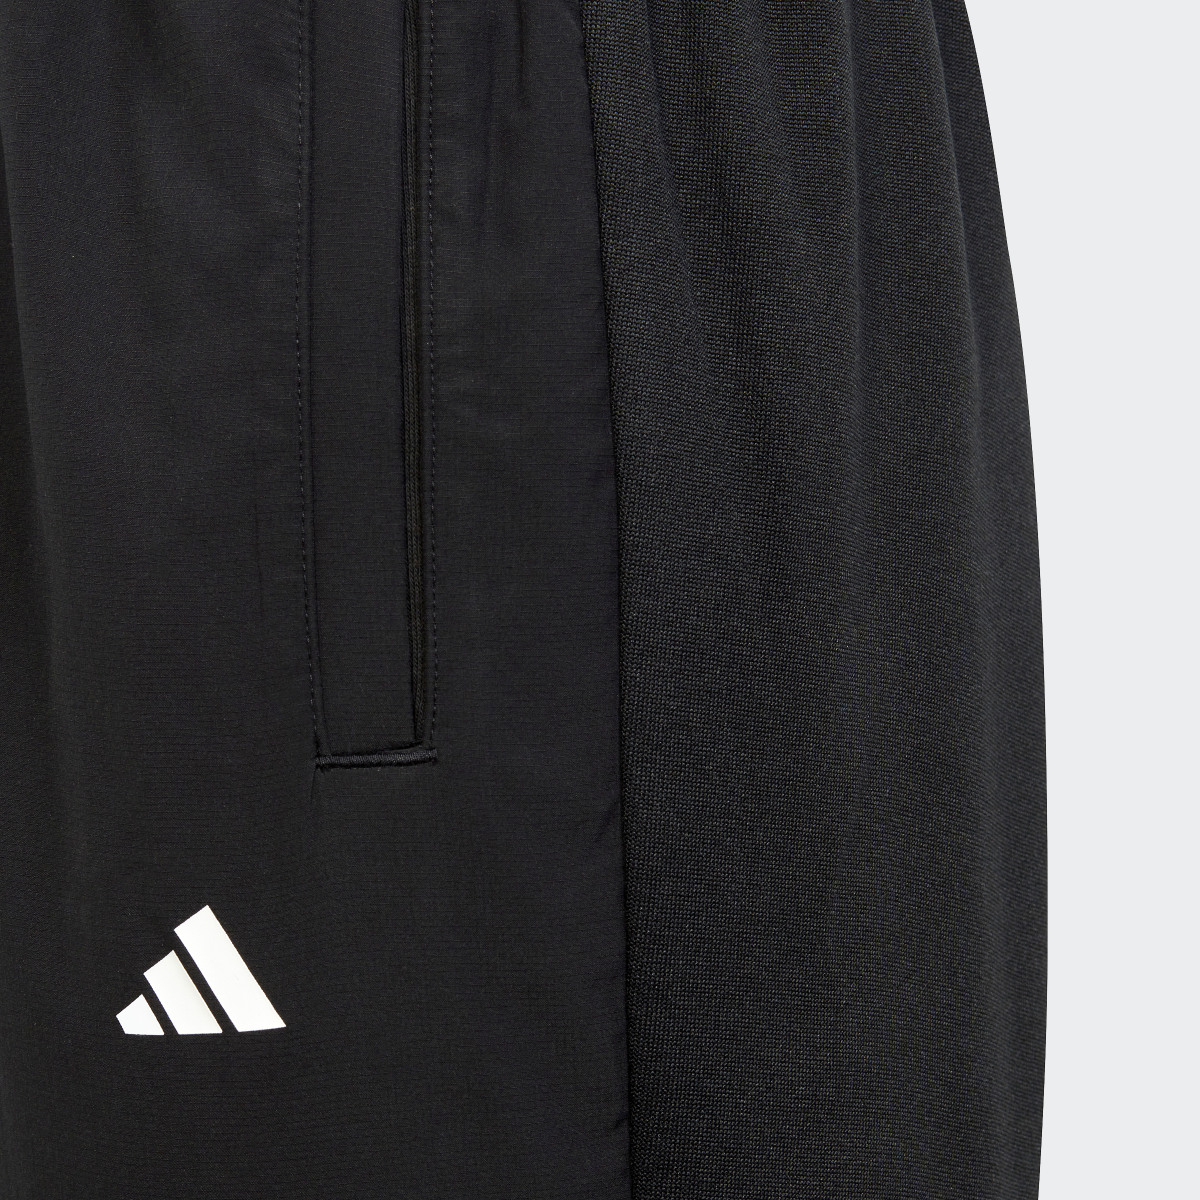 Adidas Football-Inspired Predator Pants. 6